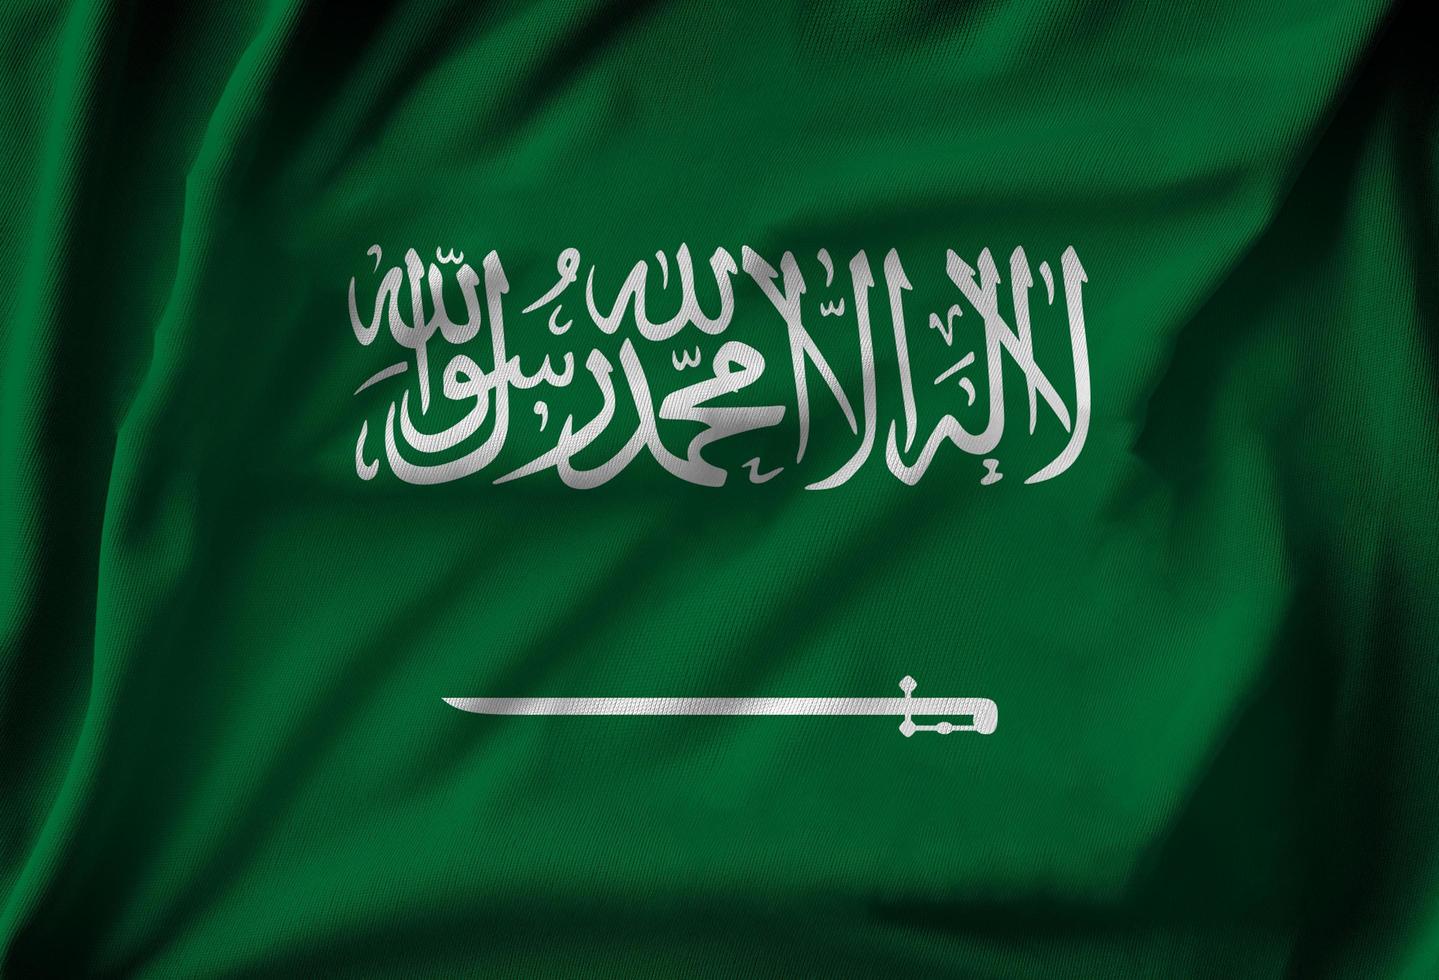 drapeau de l'Arabie saoudite photo